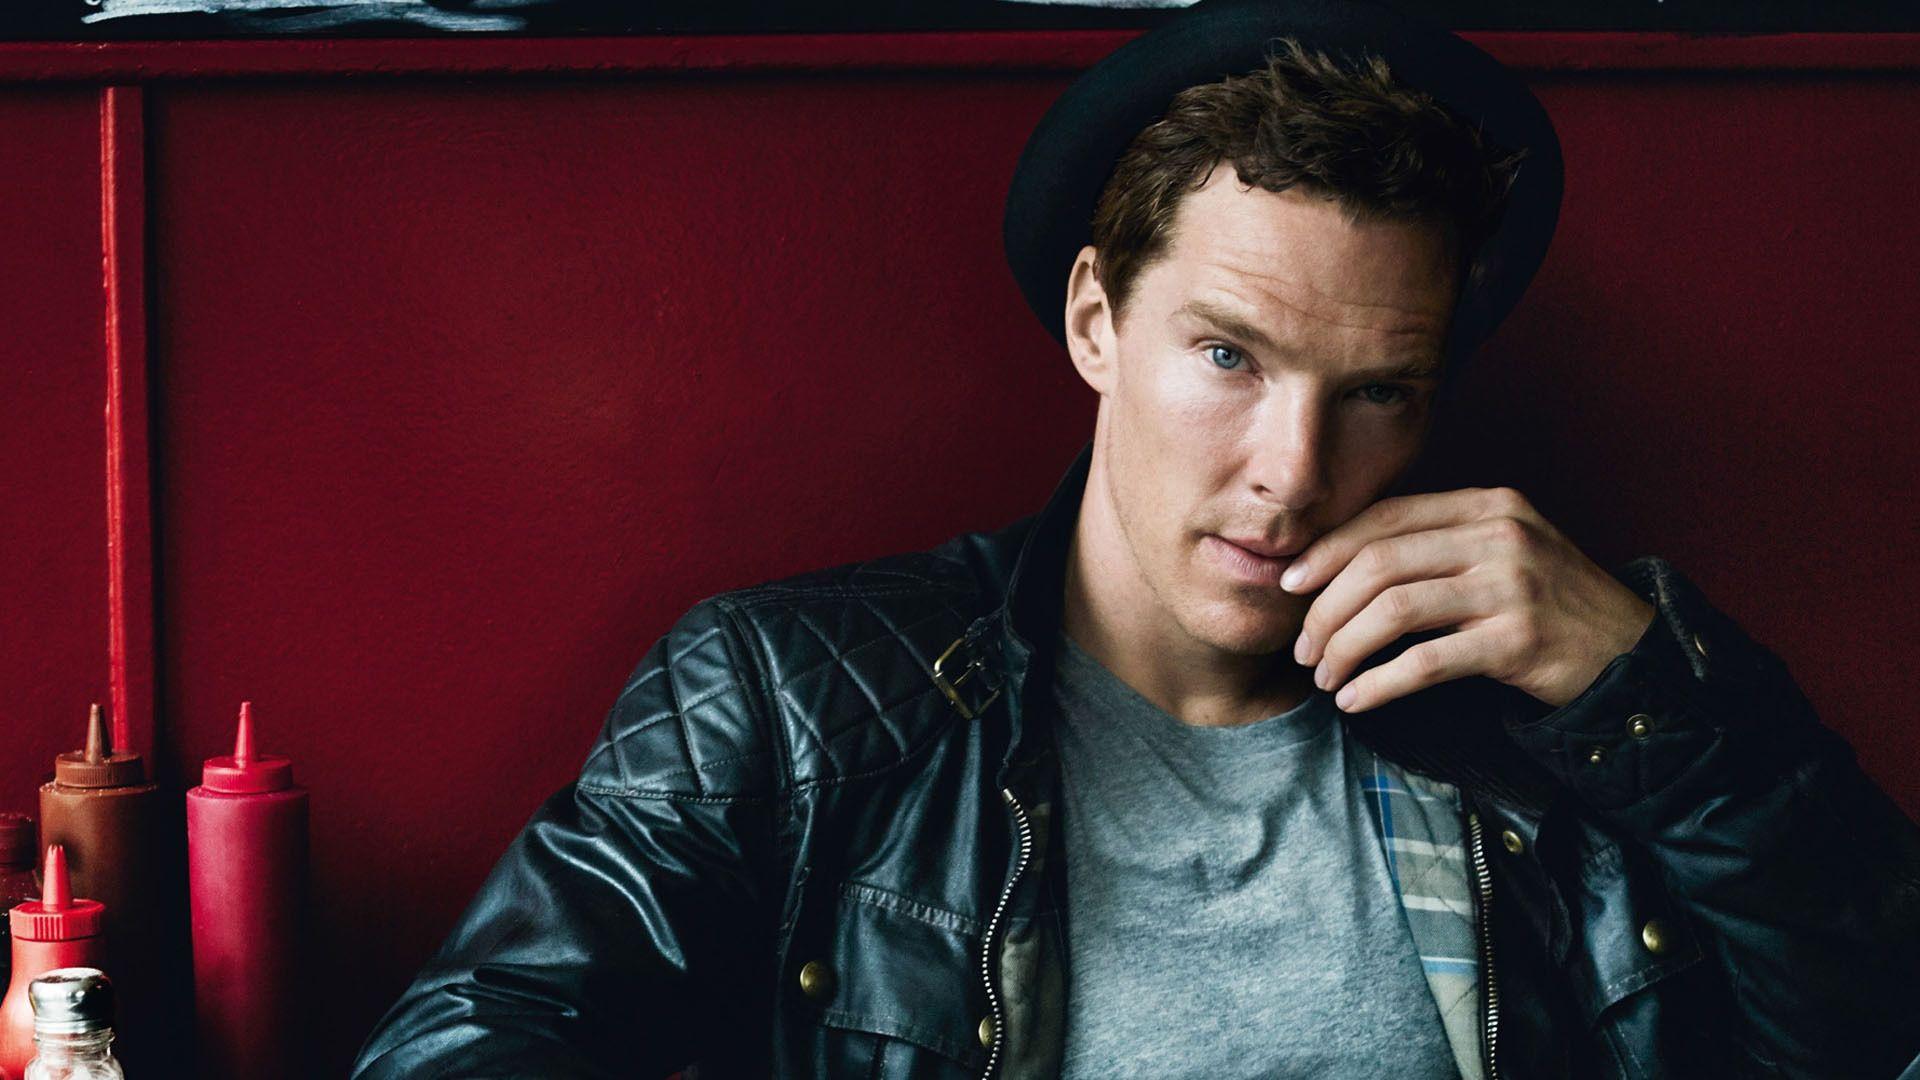 Benedict Cumberbatch Wallpaper Image Photo Picture Background